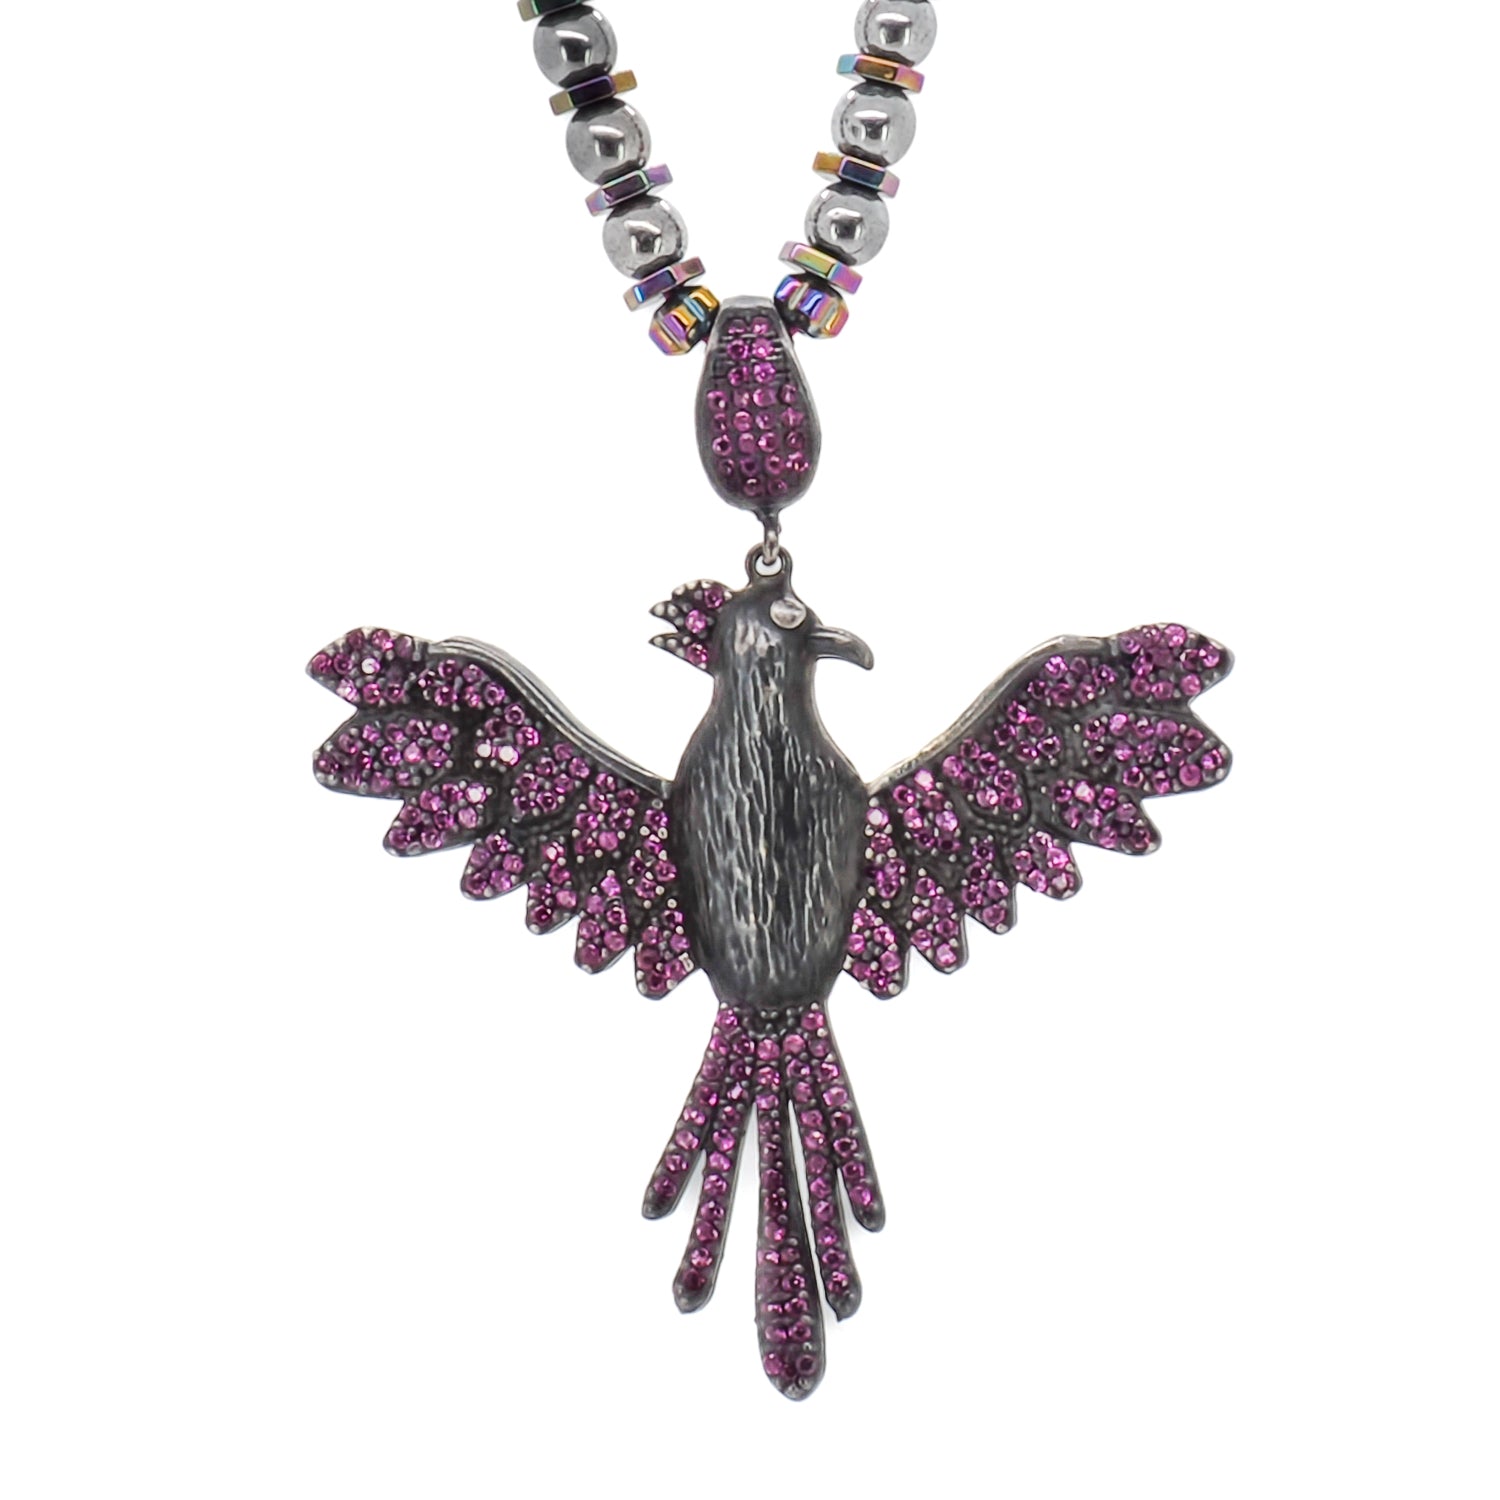 The Inner Rebirth Phoenix Necklace showcasing the unique Phoenix pendant with sparkling Swarovski crystals.